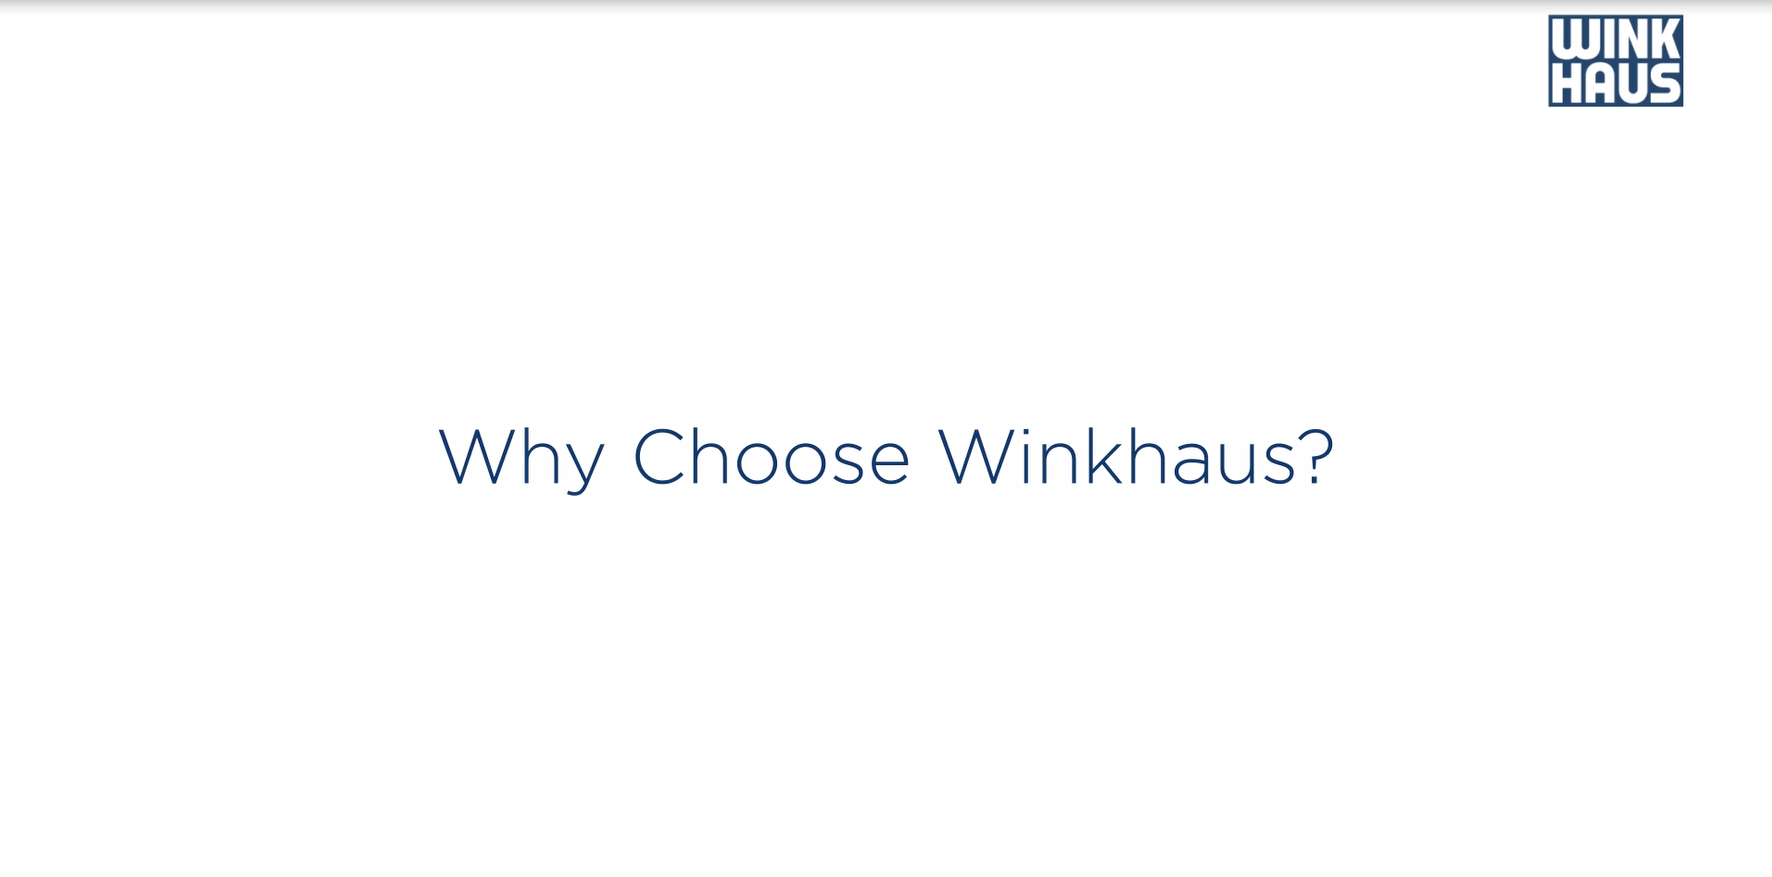 Why choose Winkhaus?